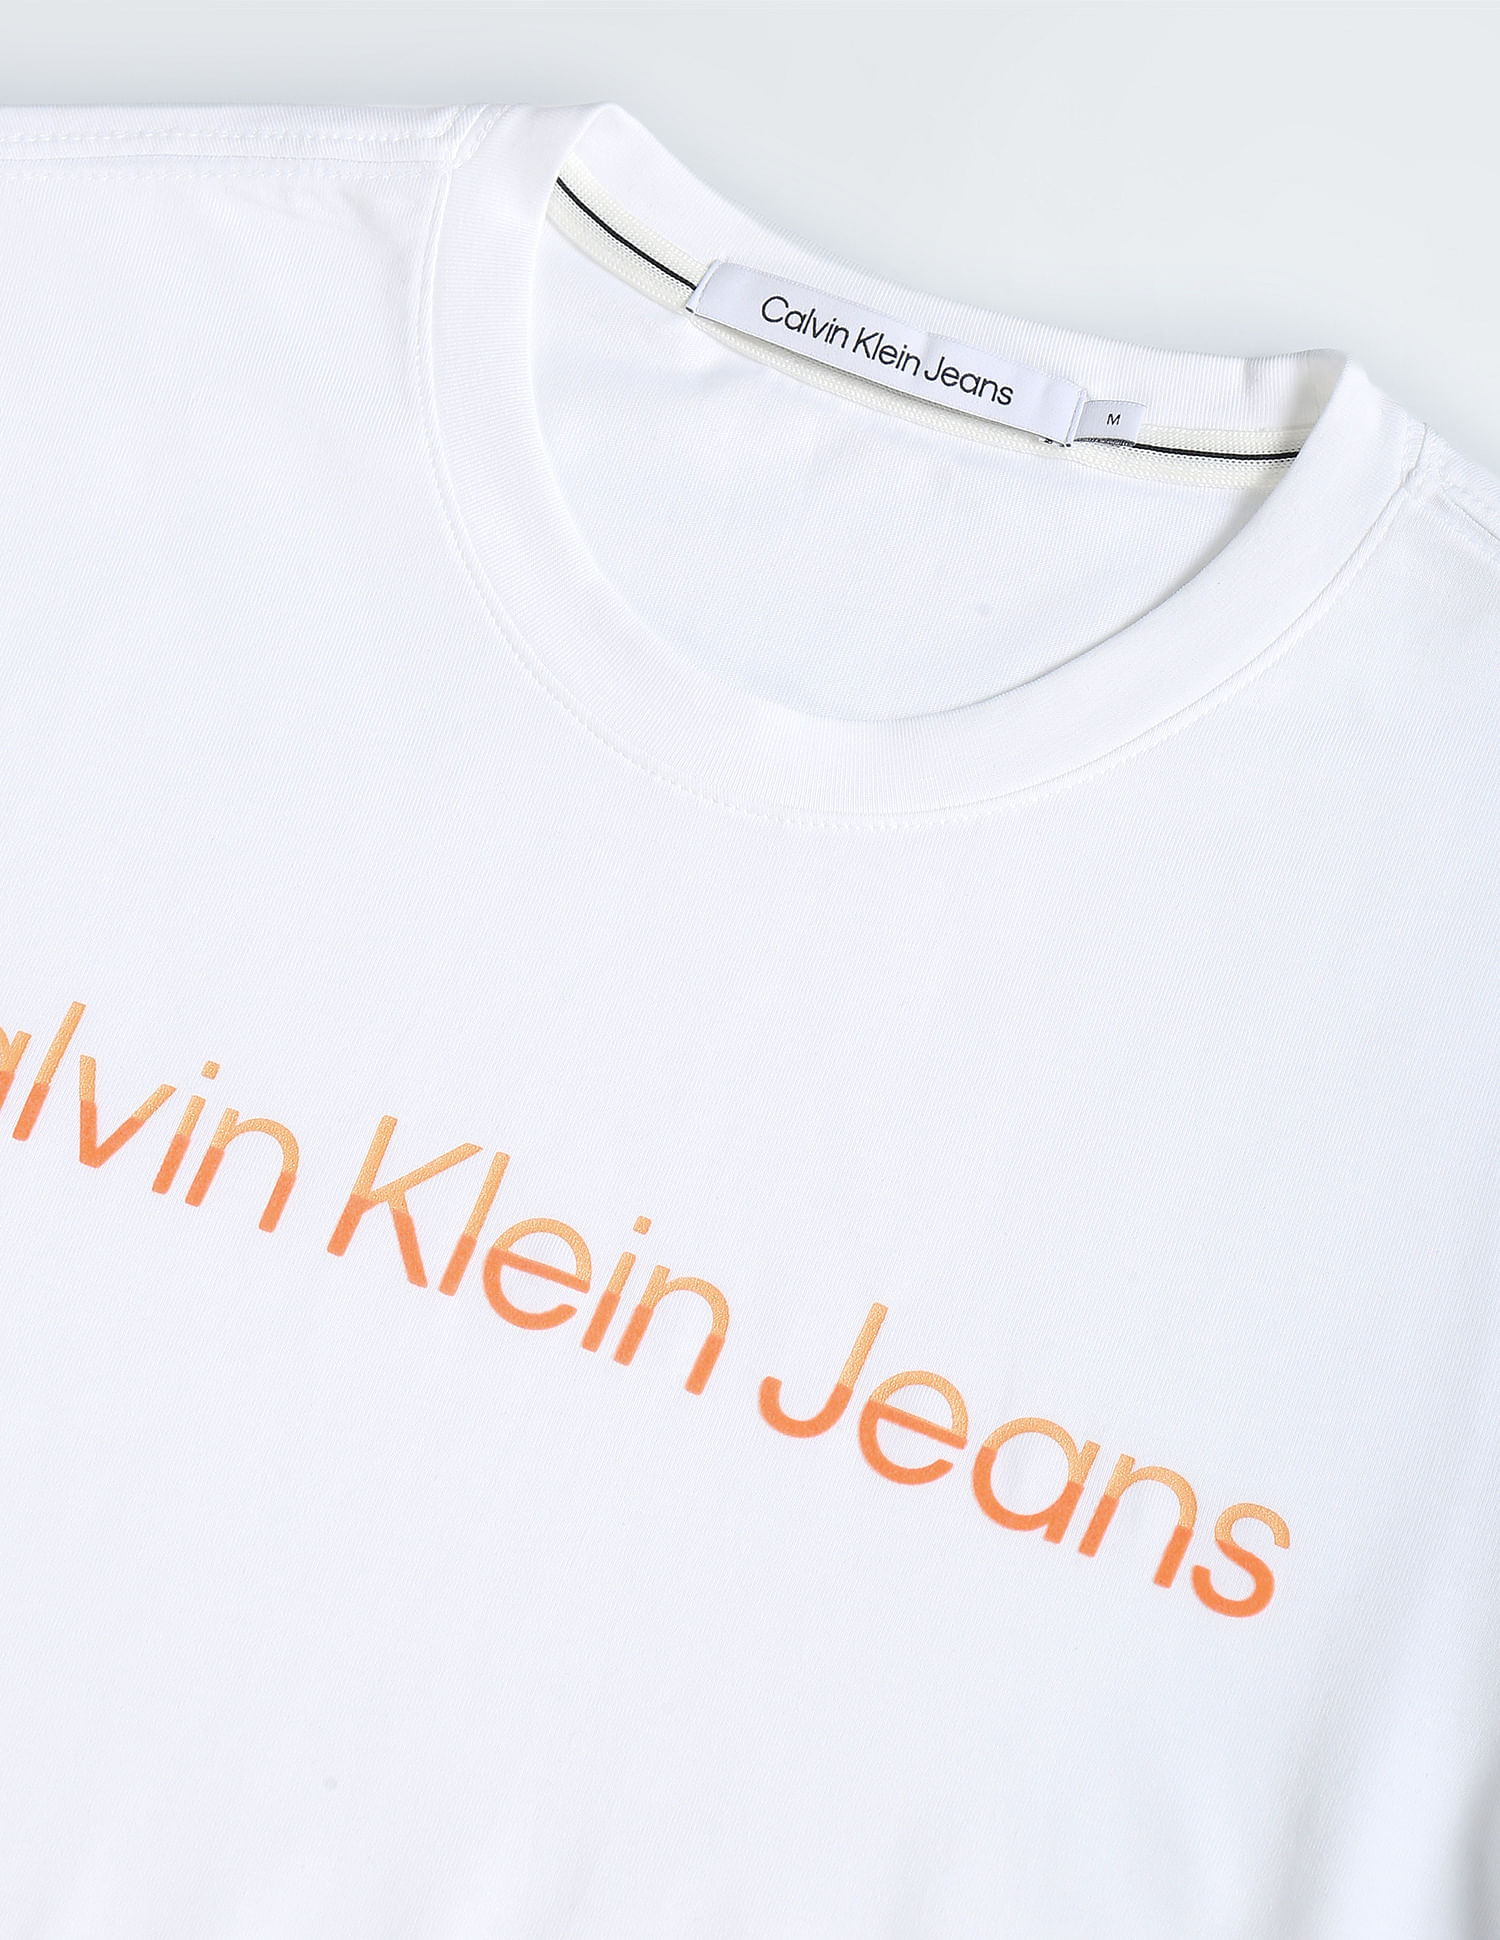 Buy Calvin Klein Jeans Transitional Cotton Brand Print T-Shirt - NNNOW.com